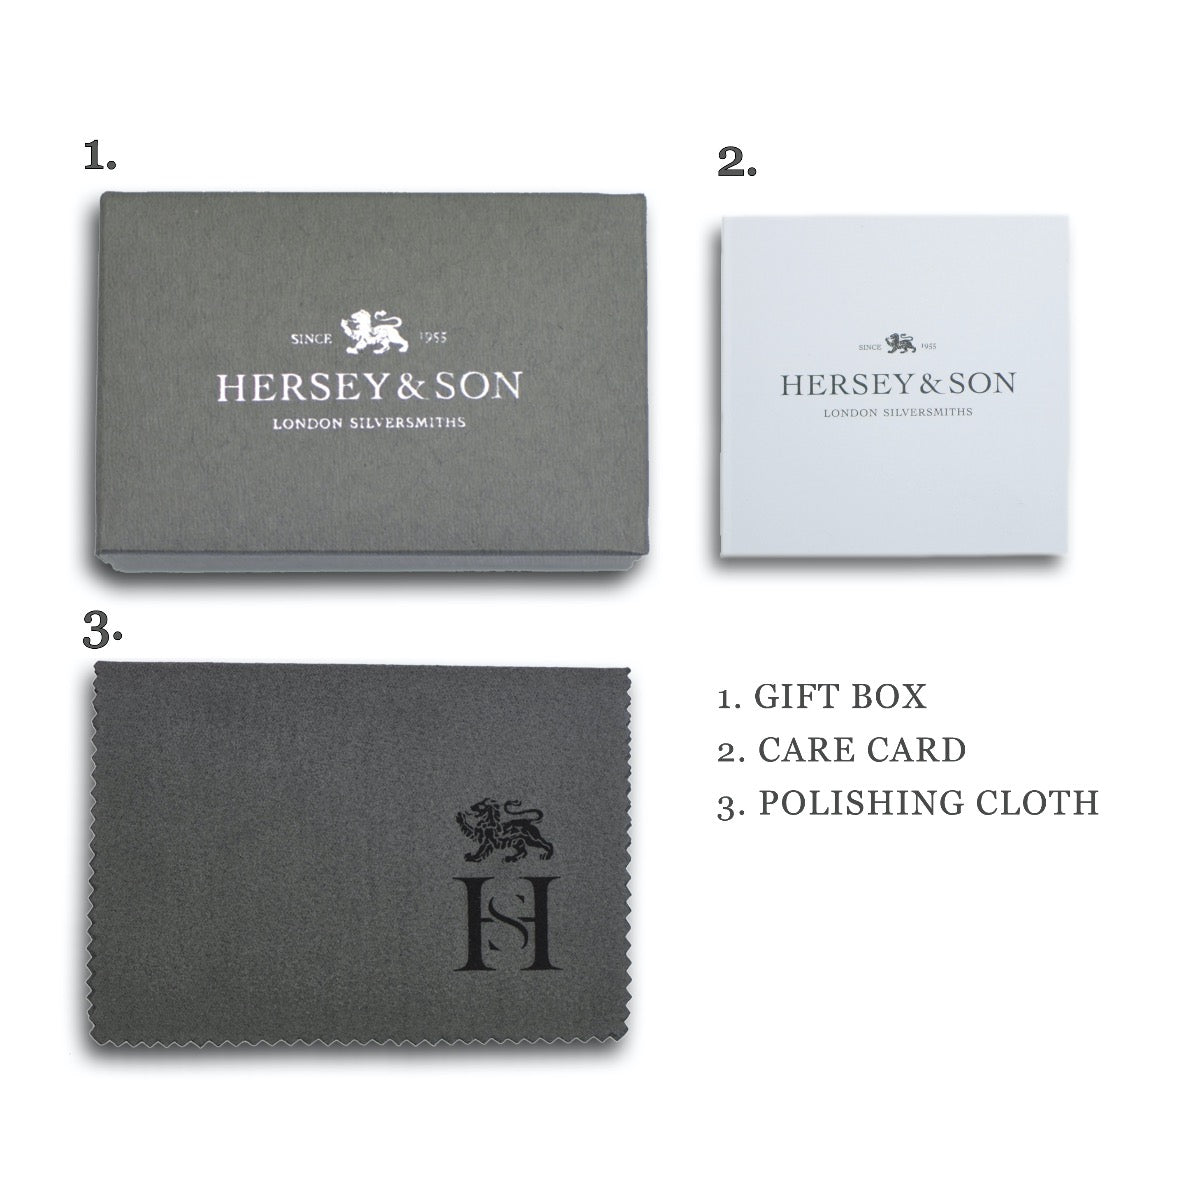 Hersey & Son Silversmiths Packaging Lucky Penny cufflinks